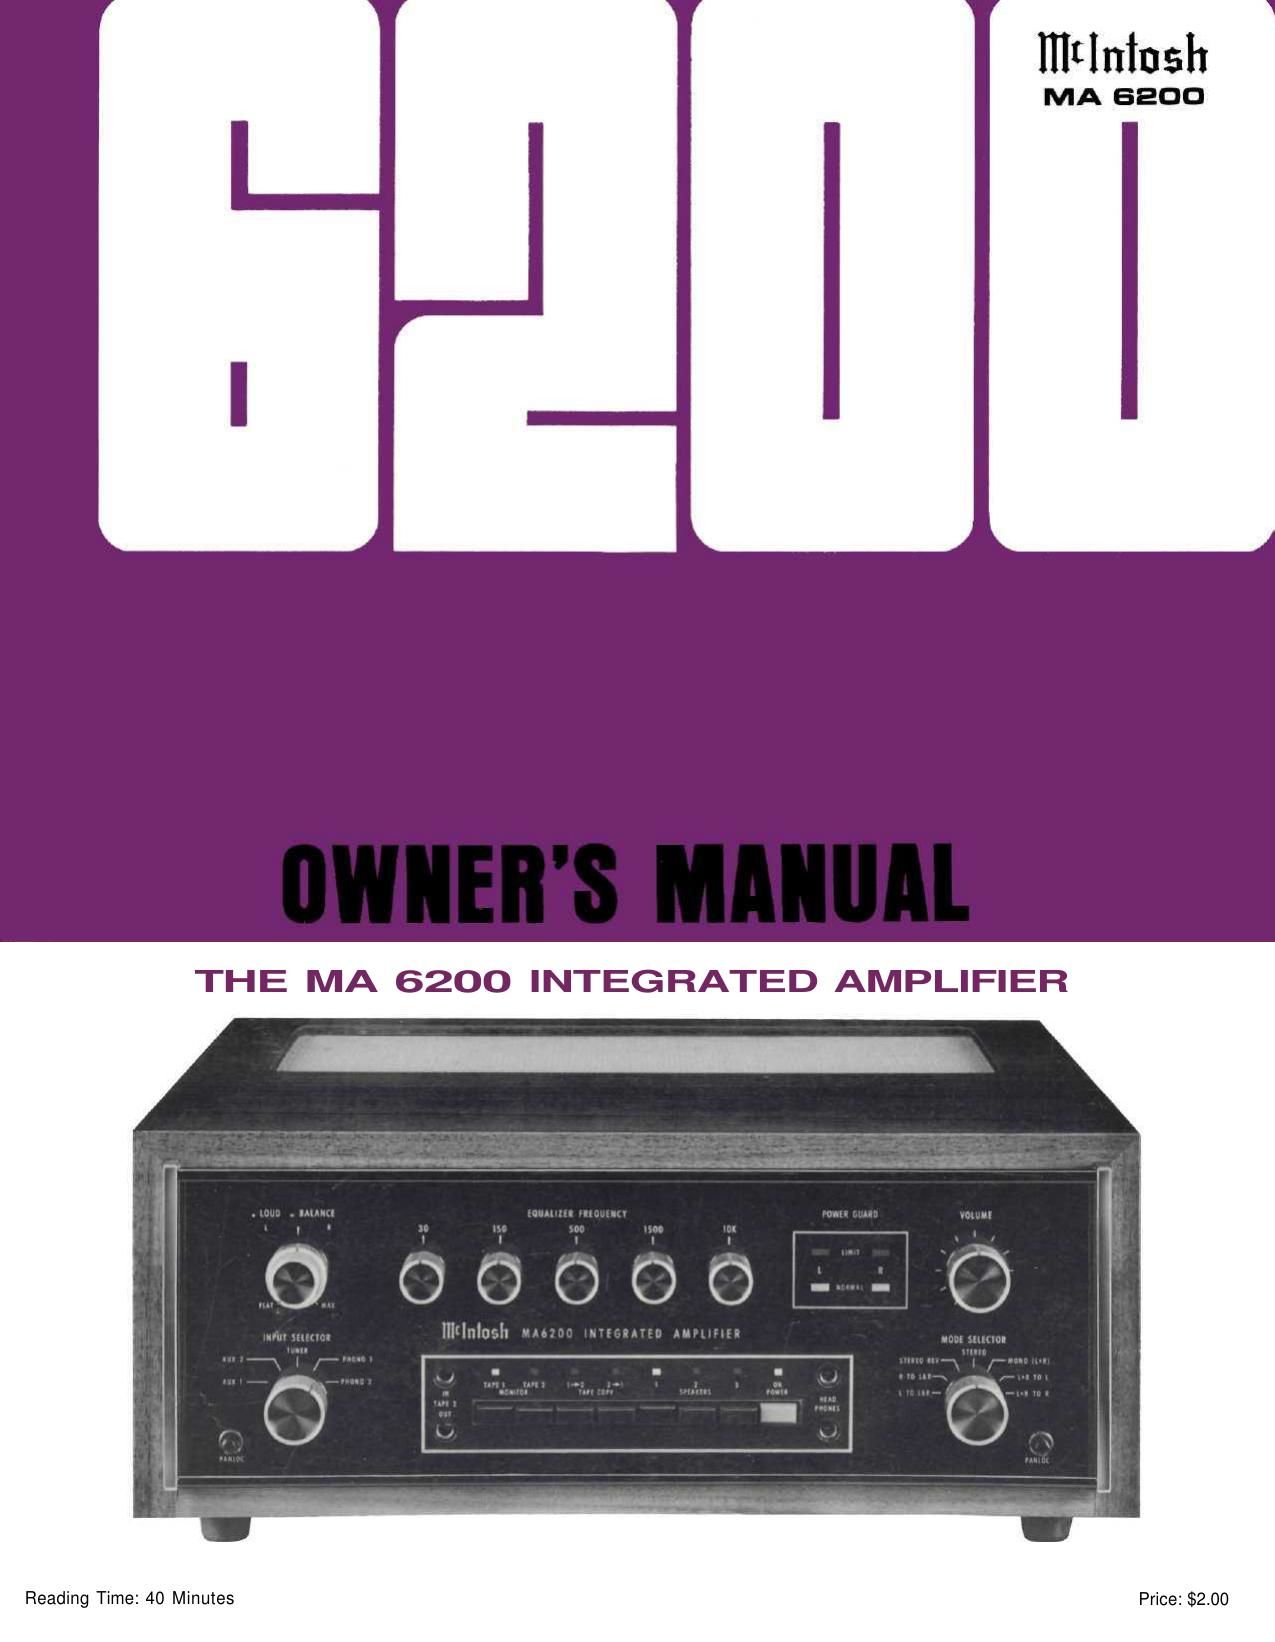 McIntosh MA 6200 Owners Manual